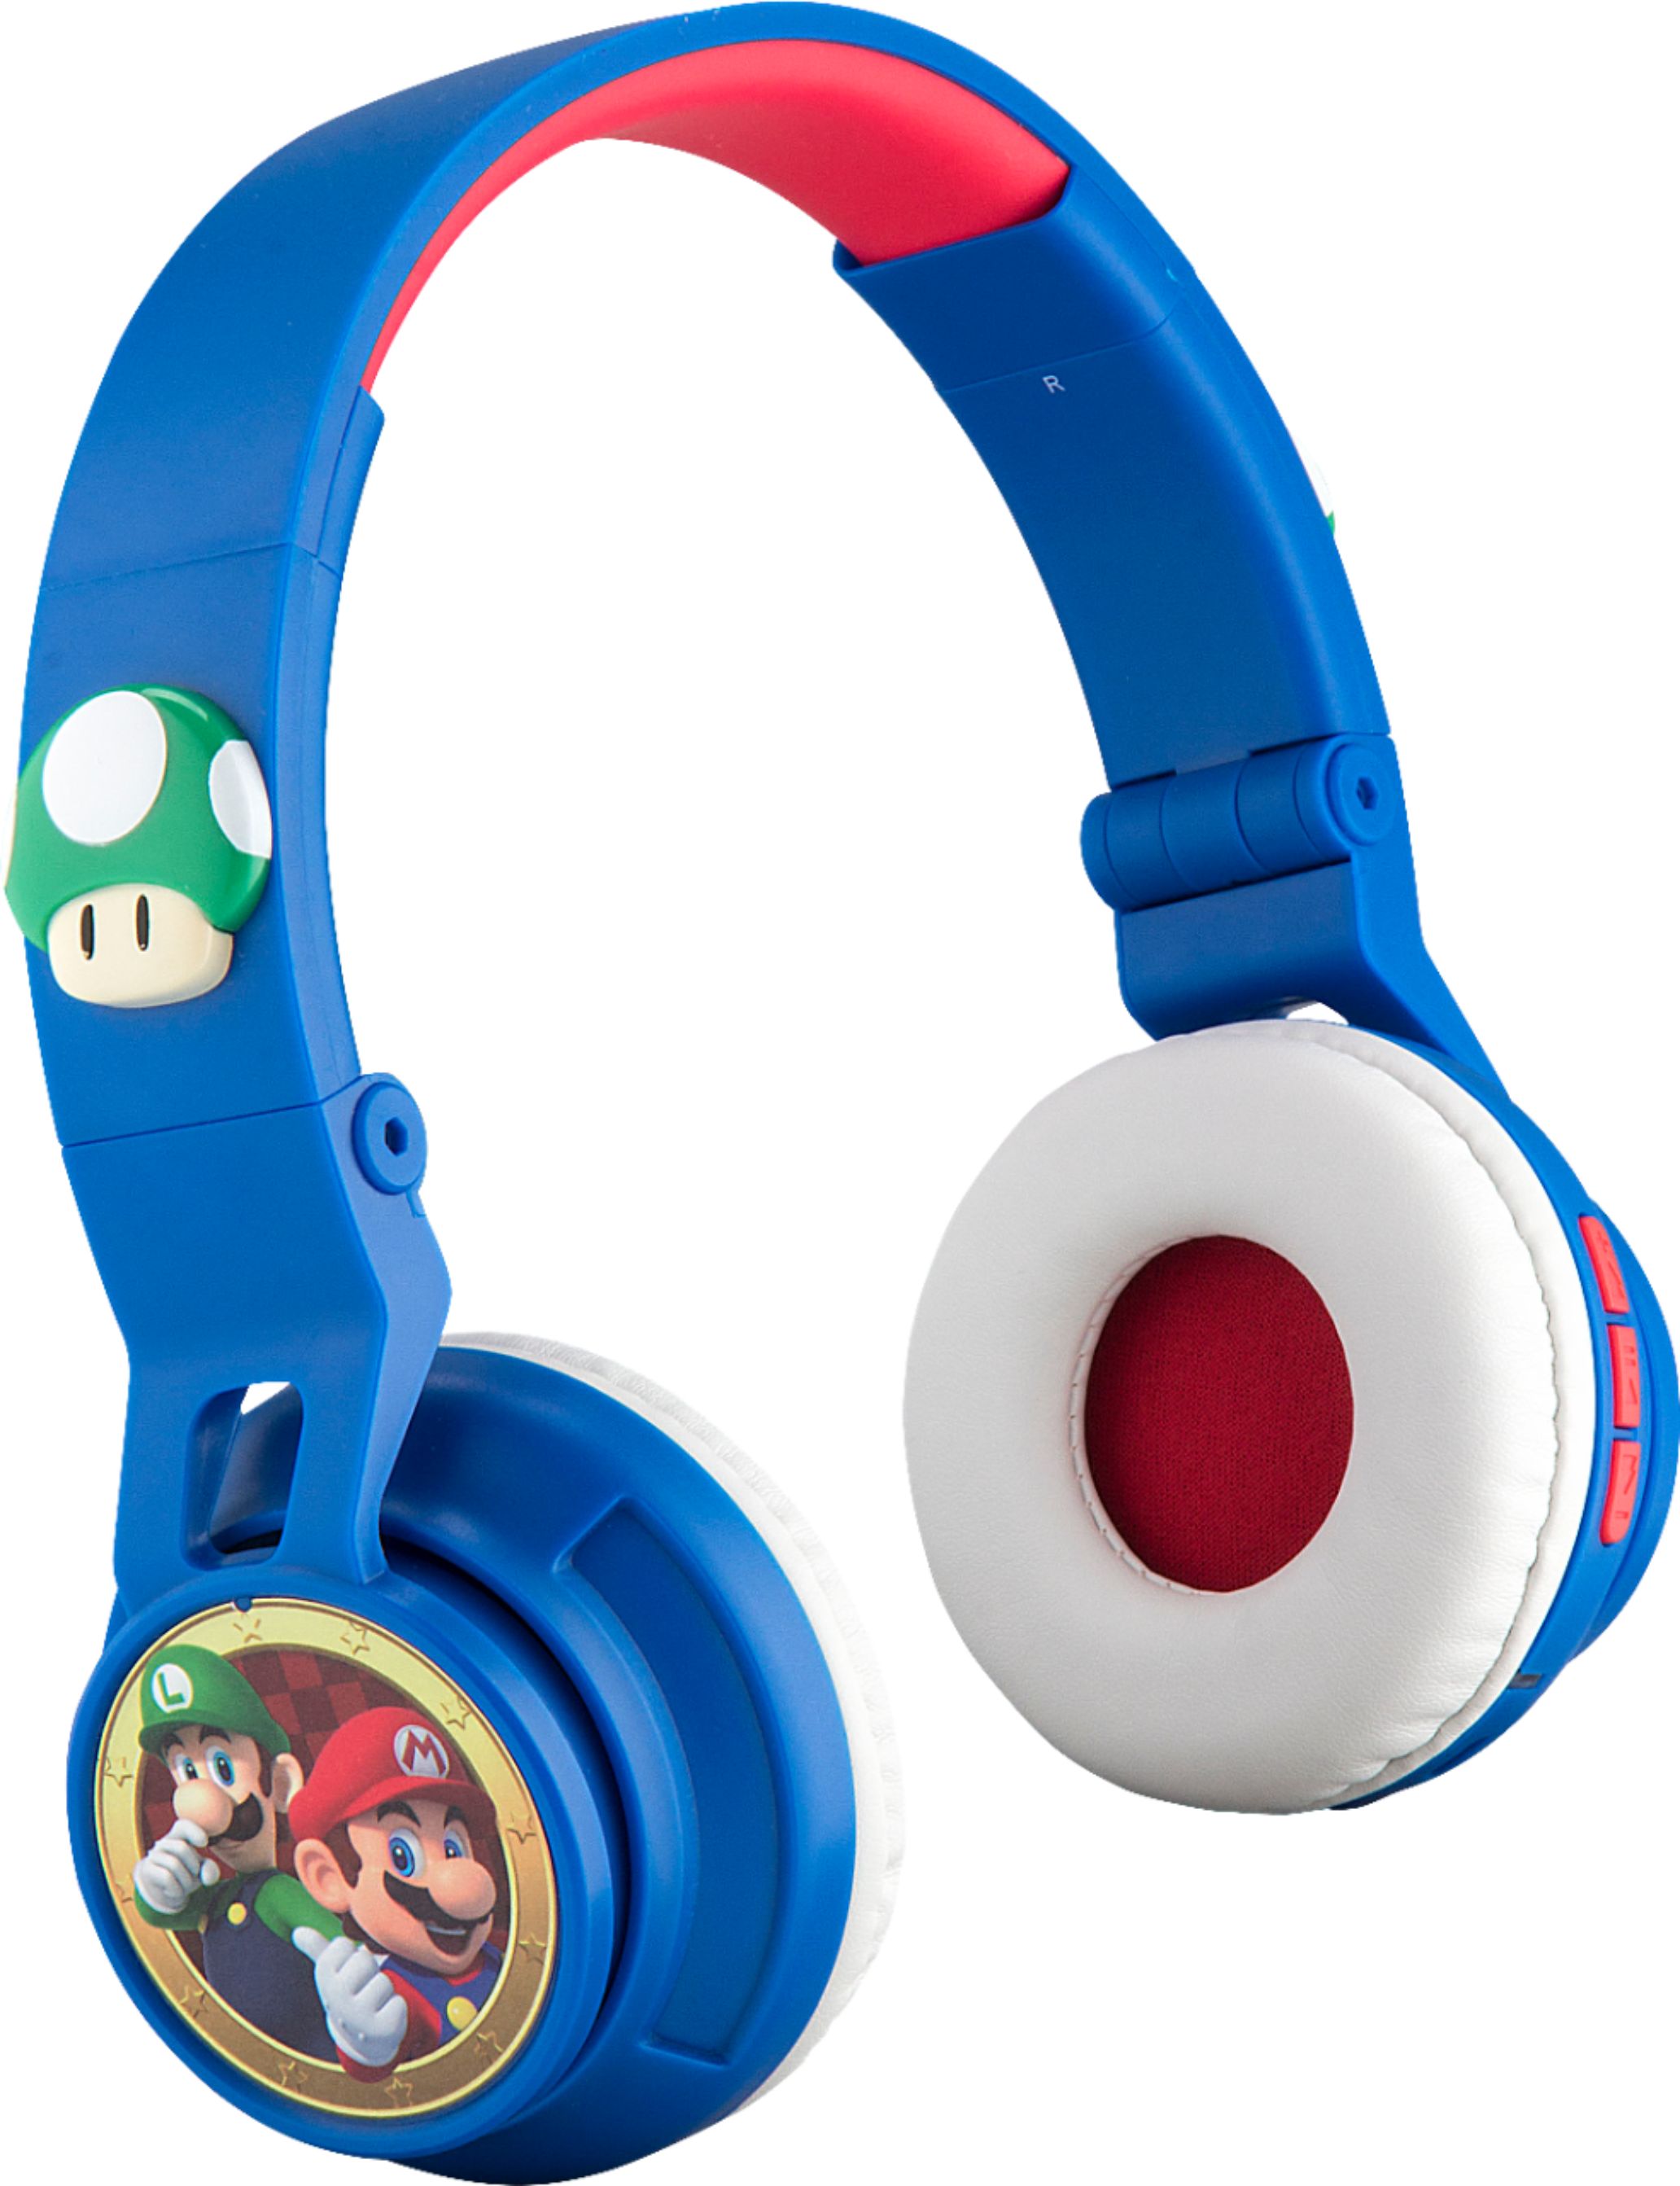 Angle View: Super Mario Bluetooth Headphones for Kids